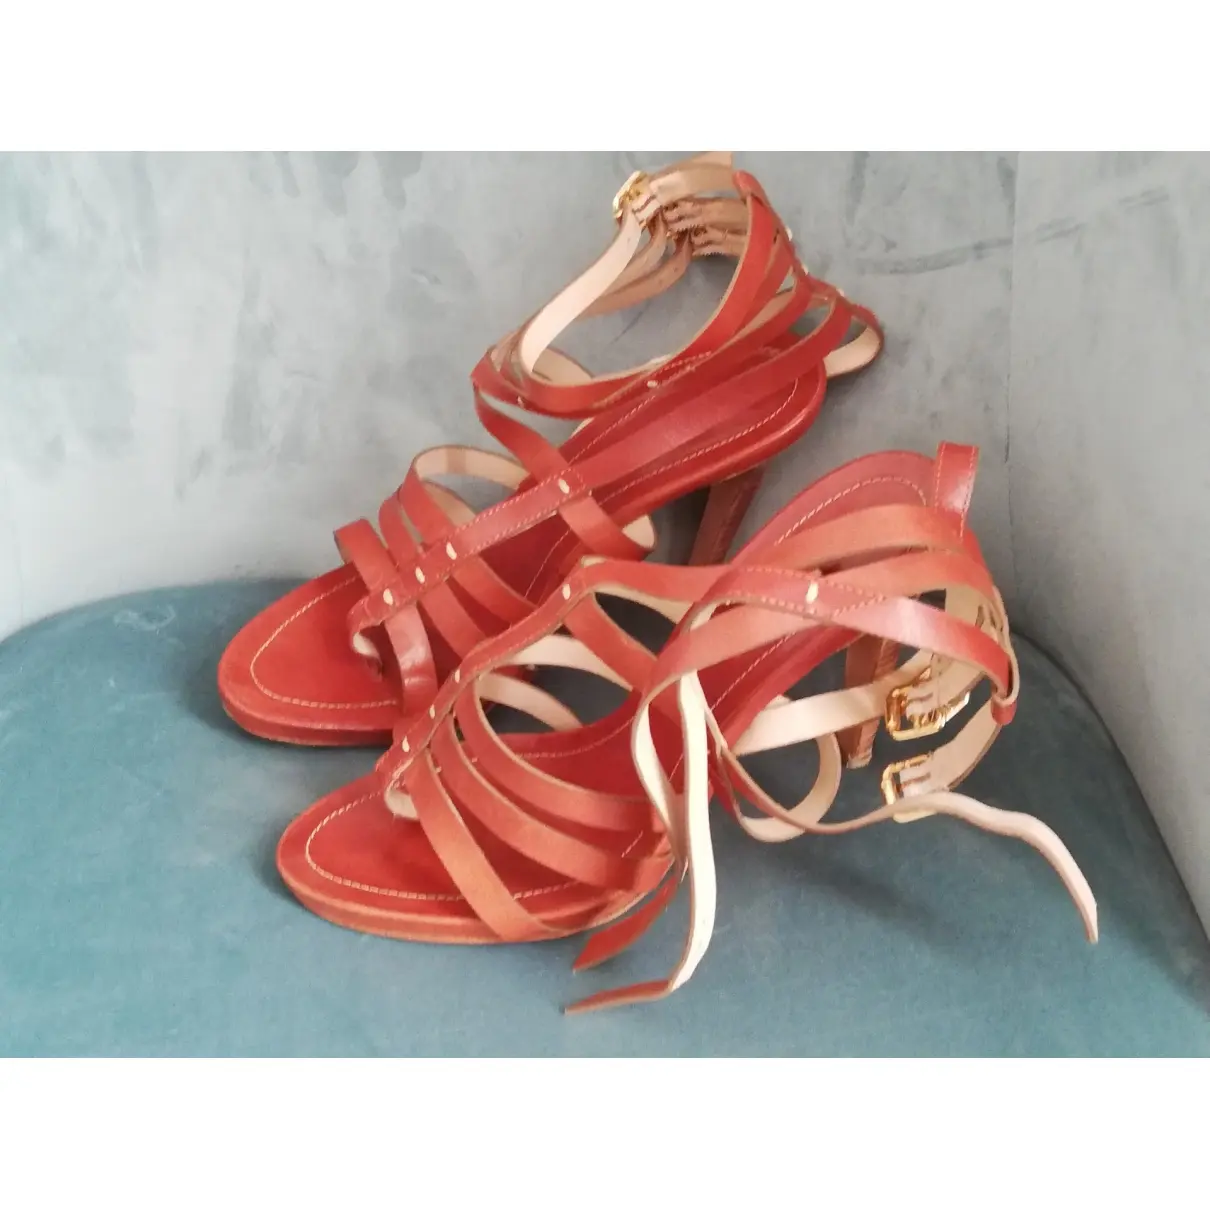 Manoush Leather sandal for sale